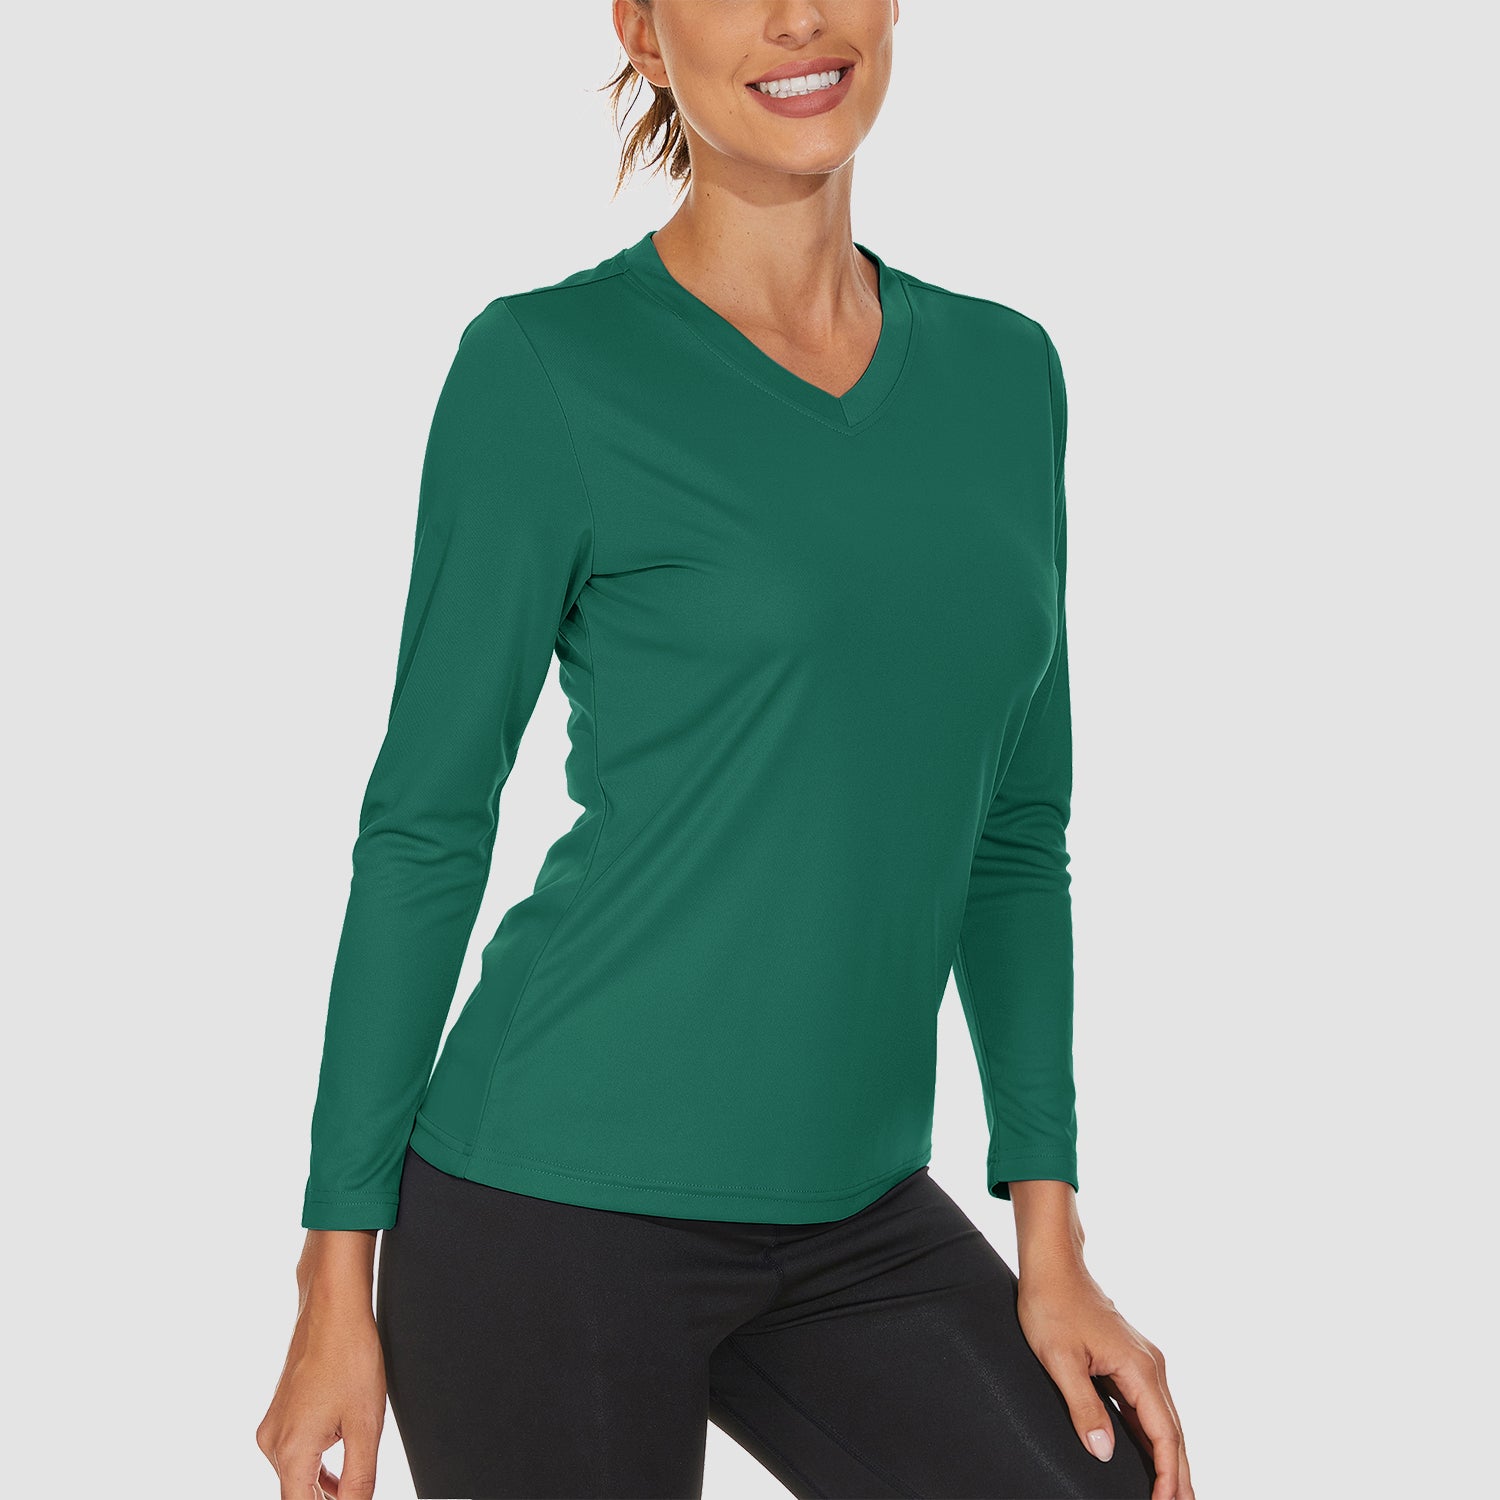 Women's Long Sleeve Shirts UPF 50+ Sun Protection T Shirts V Neck Hiking Shirt Running Workout Performance Tee